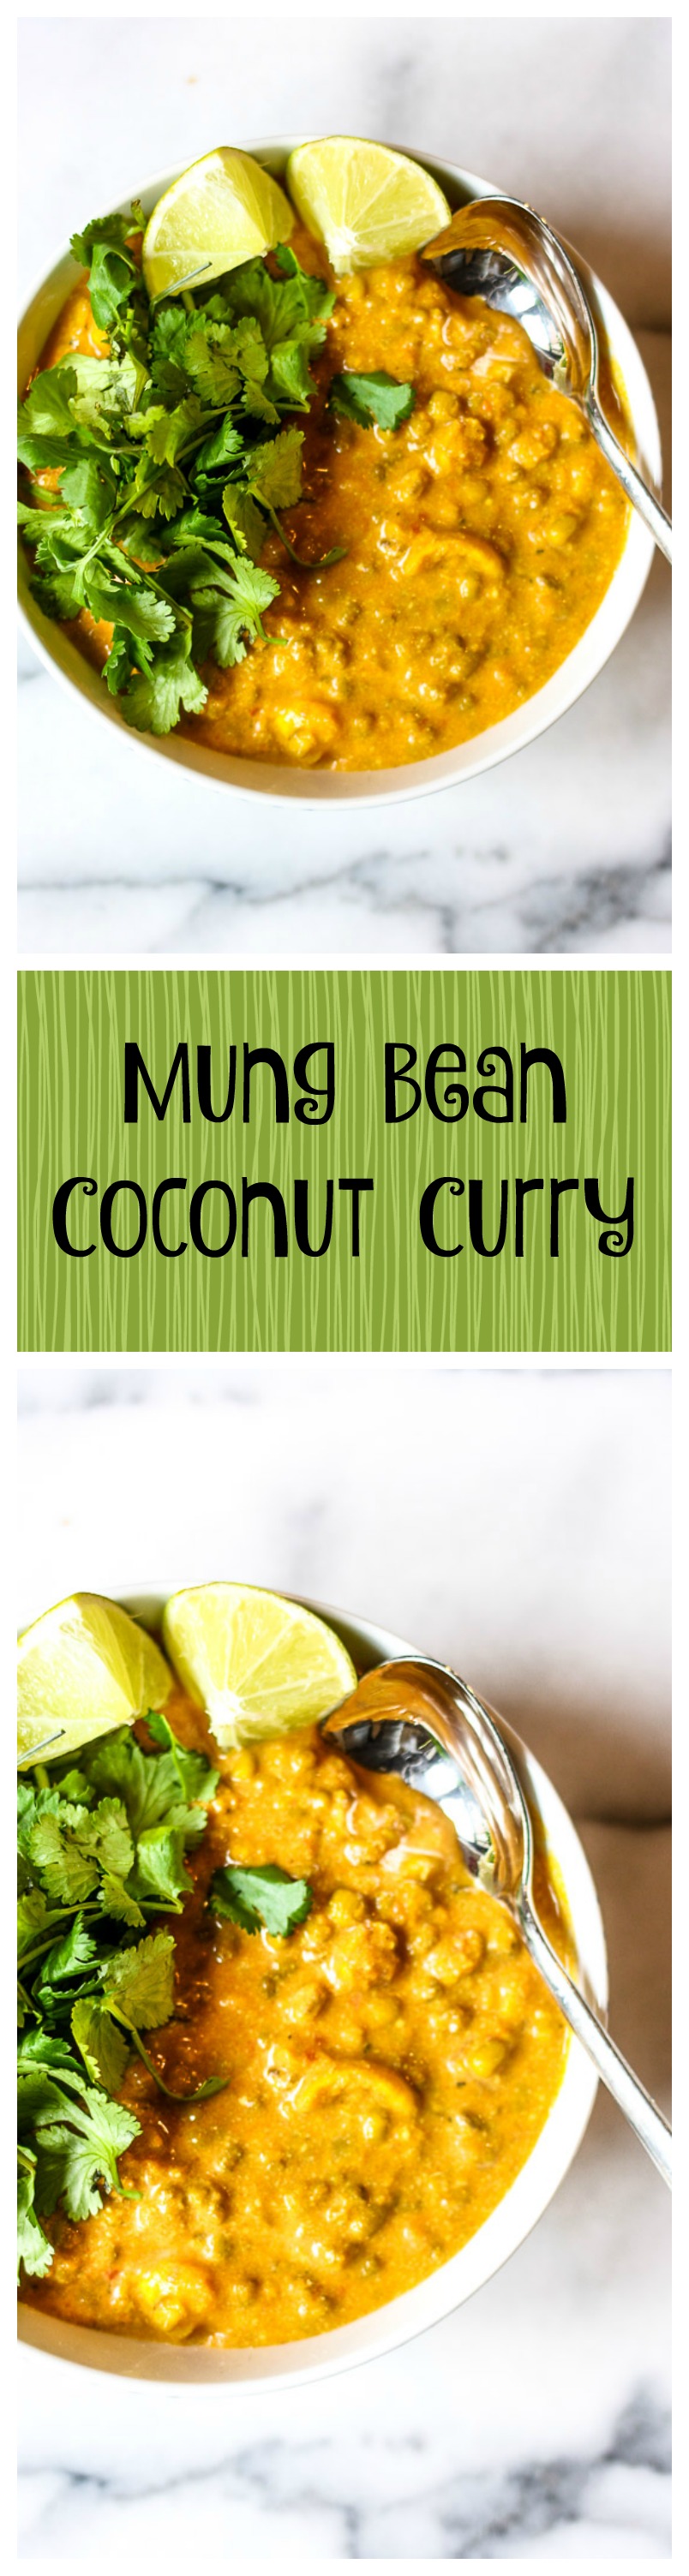 mung-bean-coconut-curry